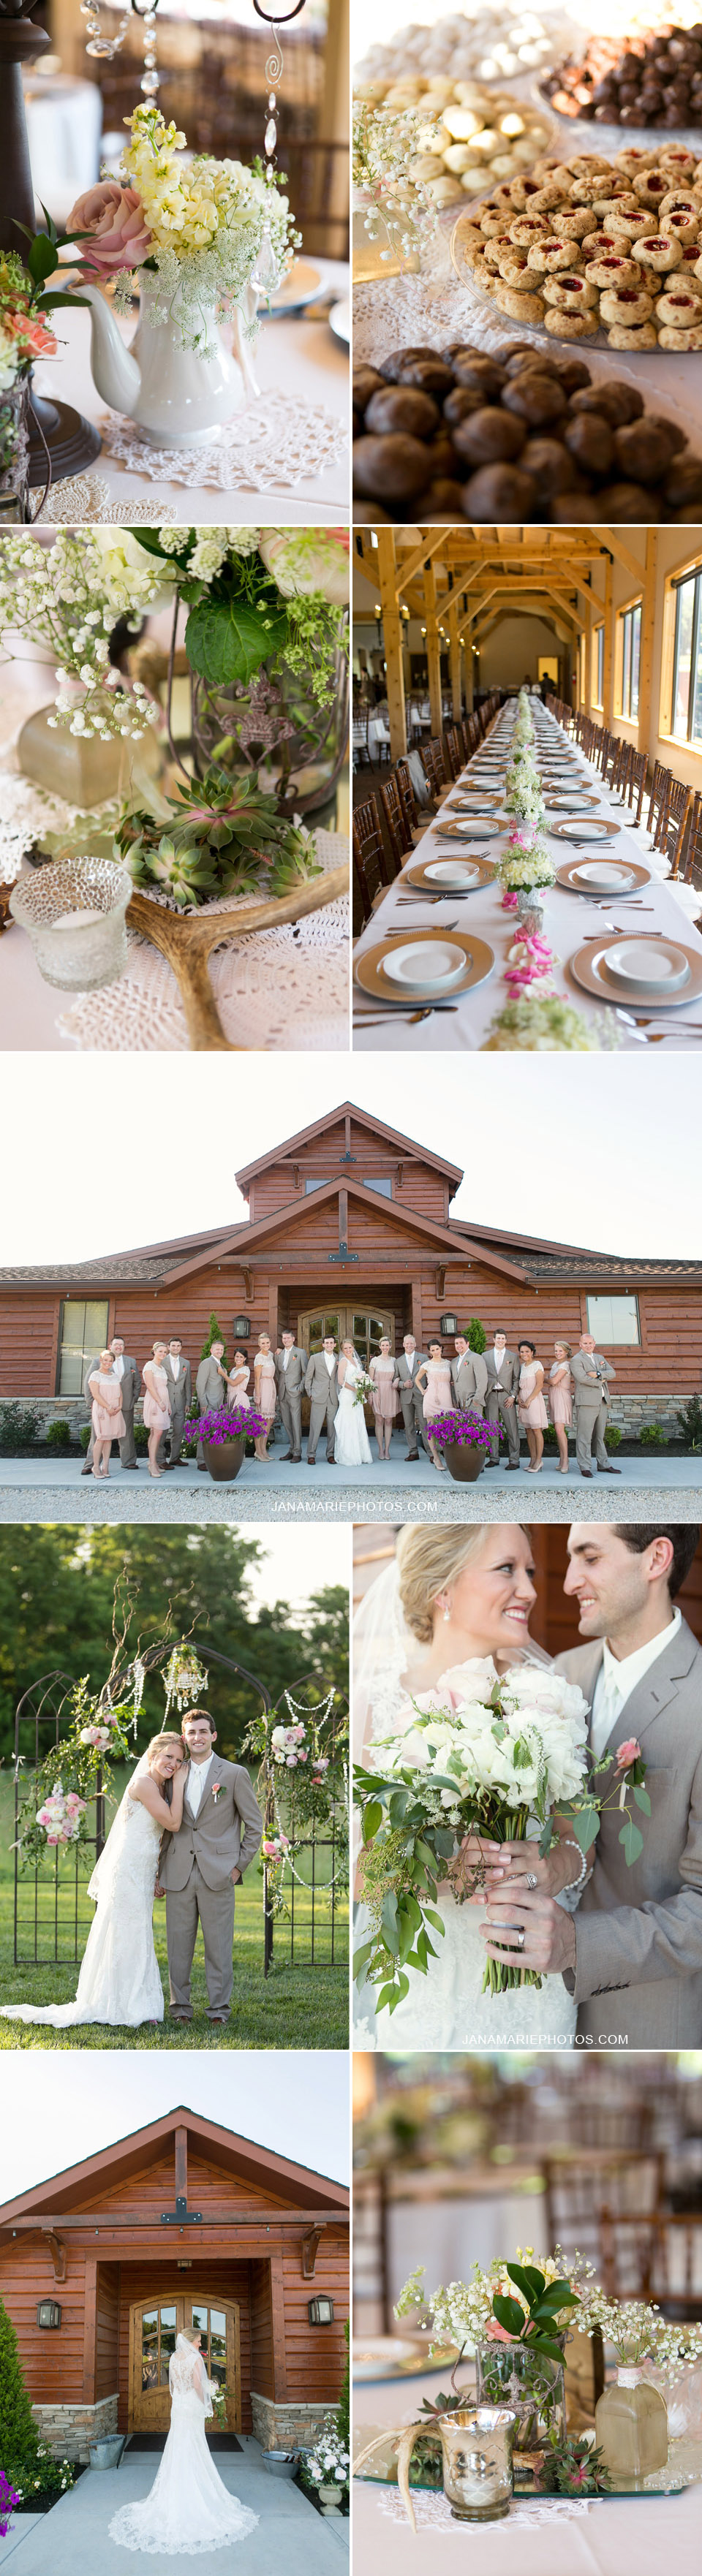 Buffalo Lodge, KC wedding photographer, KC weddings, Kansas City, Kingsville Missouri, Missouri weddings, Rustic, Outdoor ceremony, Jana Marie Photography